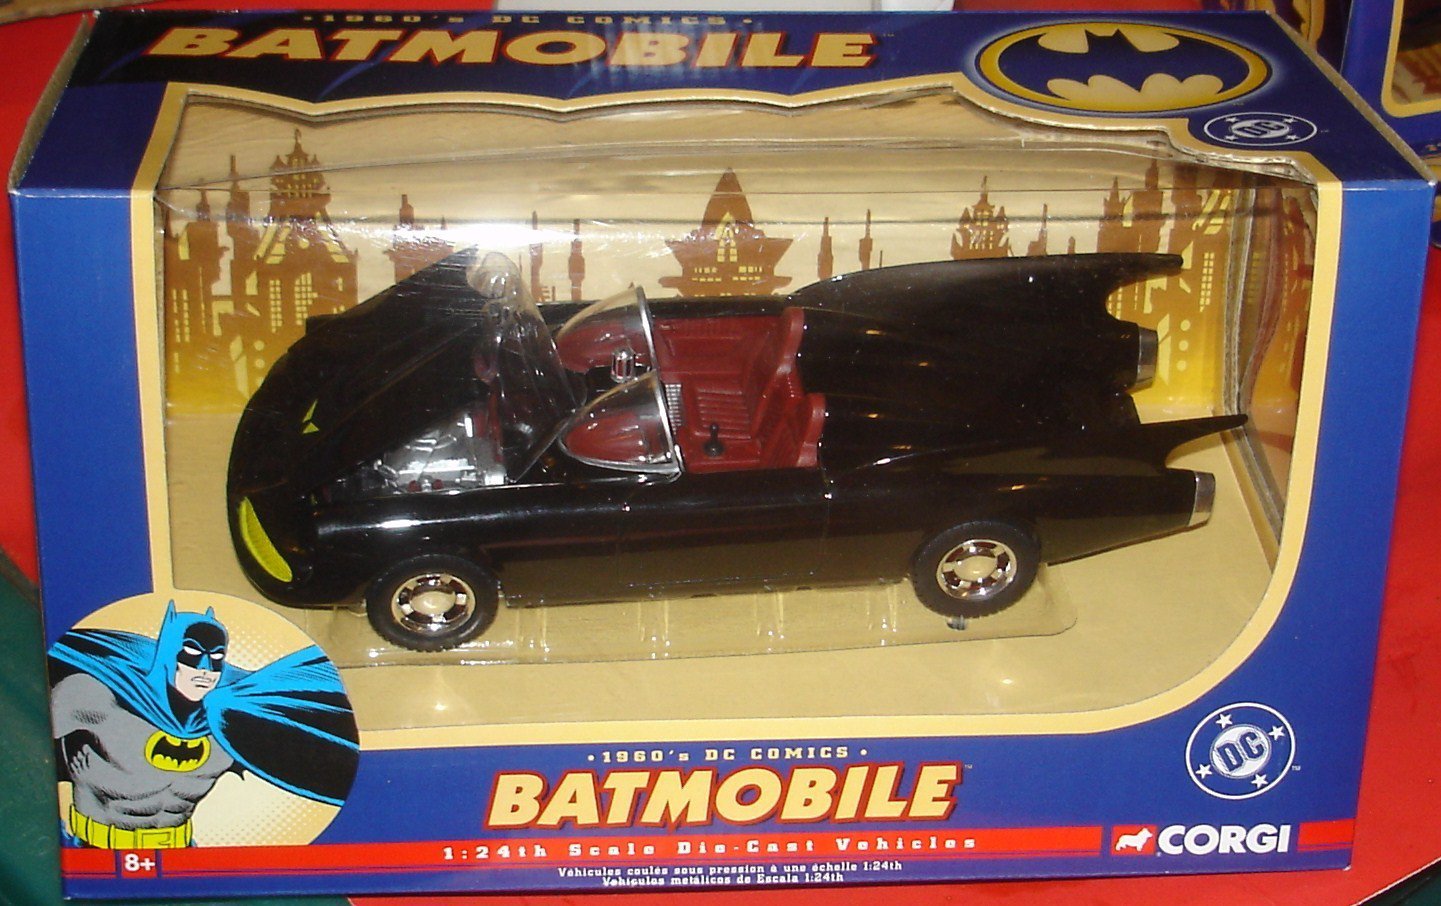 BATMAN 1960s DC COMICS BLACK BATMOBILE CORGI DIECAST 1:24th SCALE VEHICLE 2005 MODEL #77505